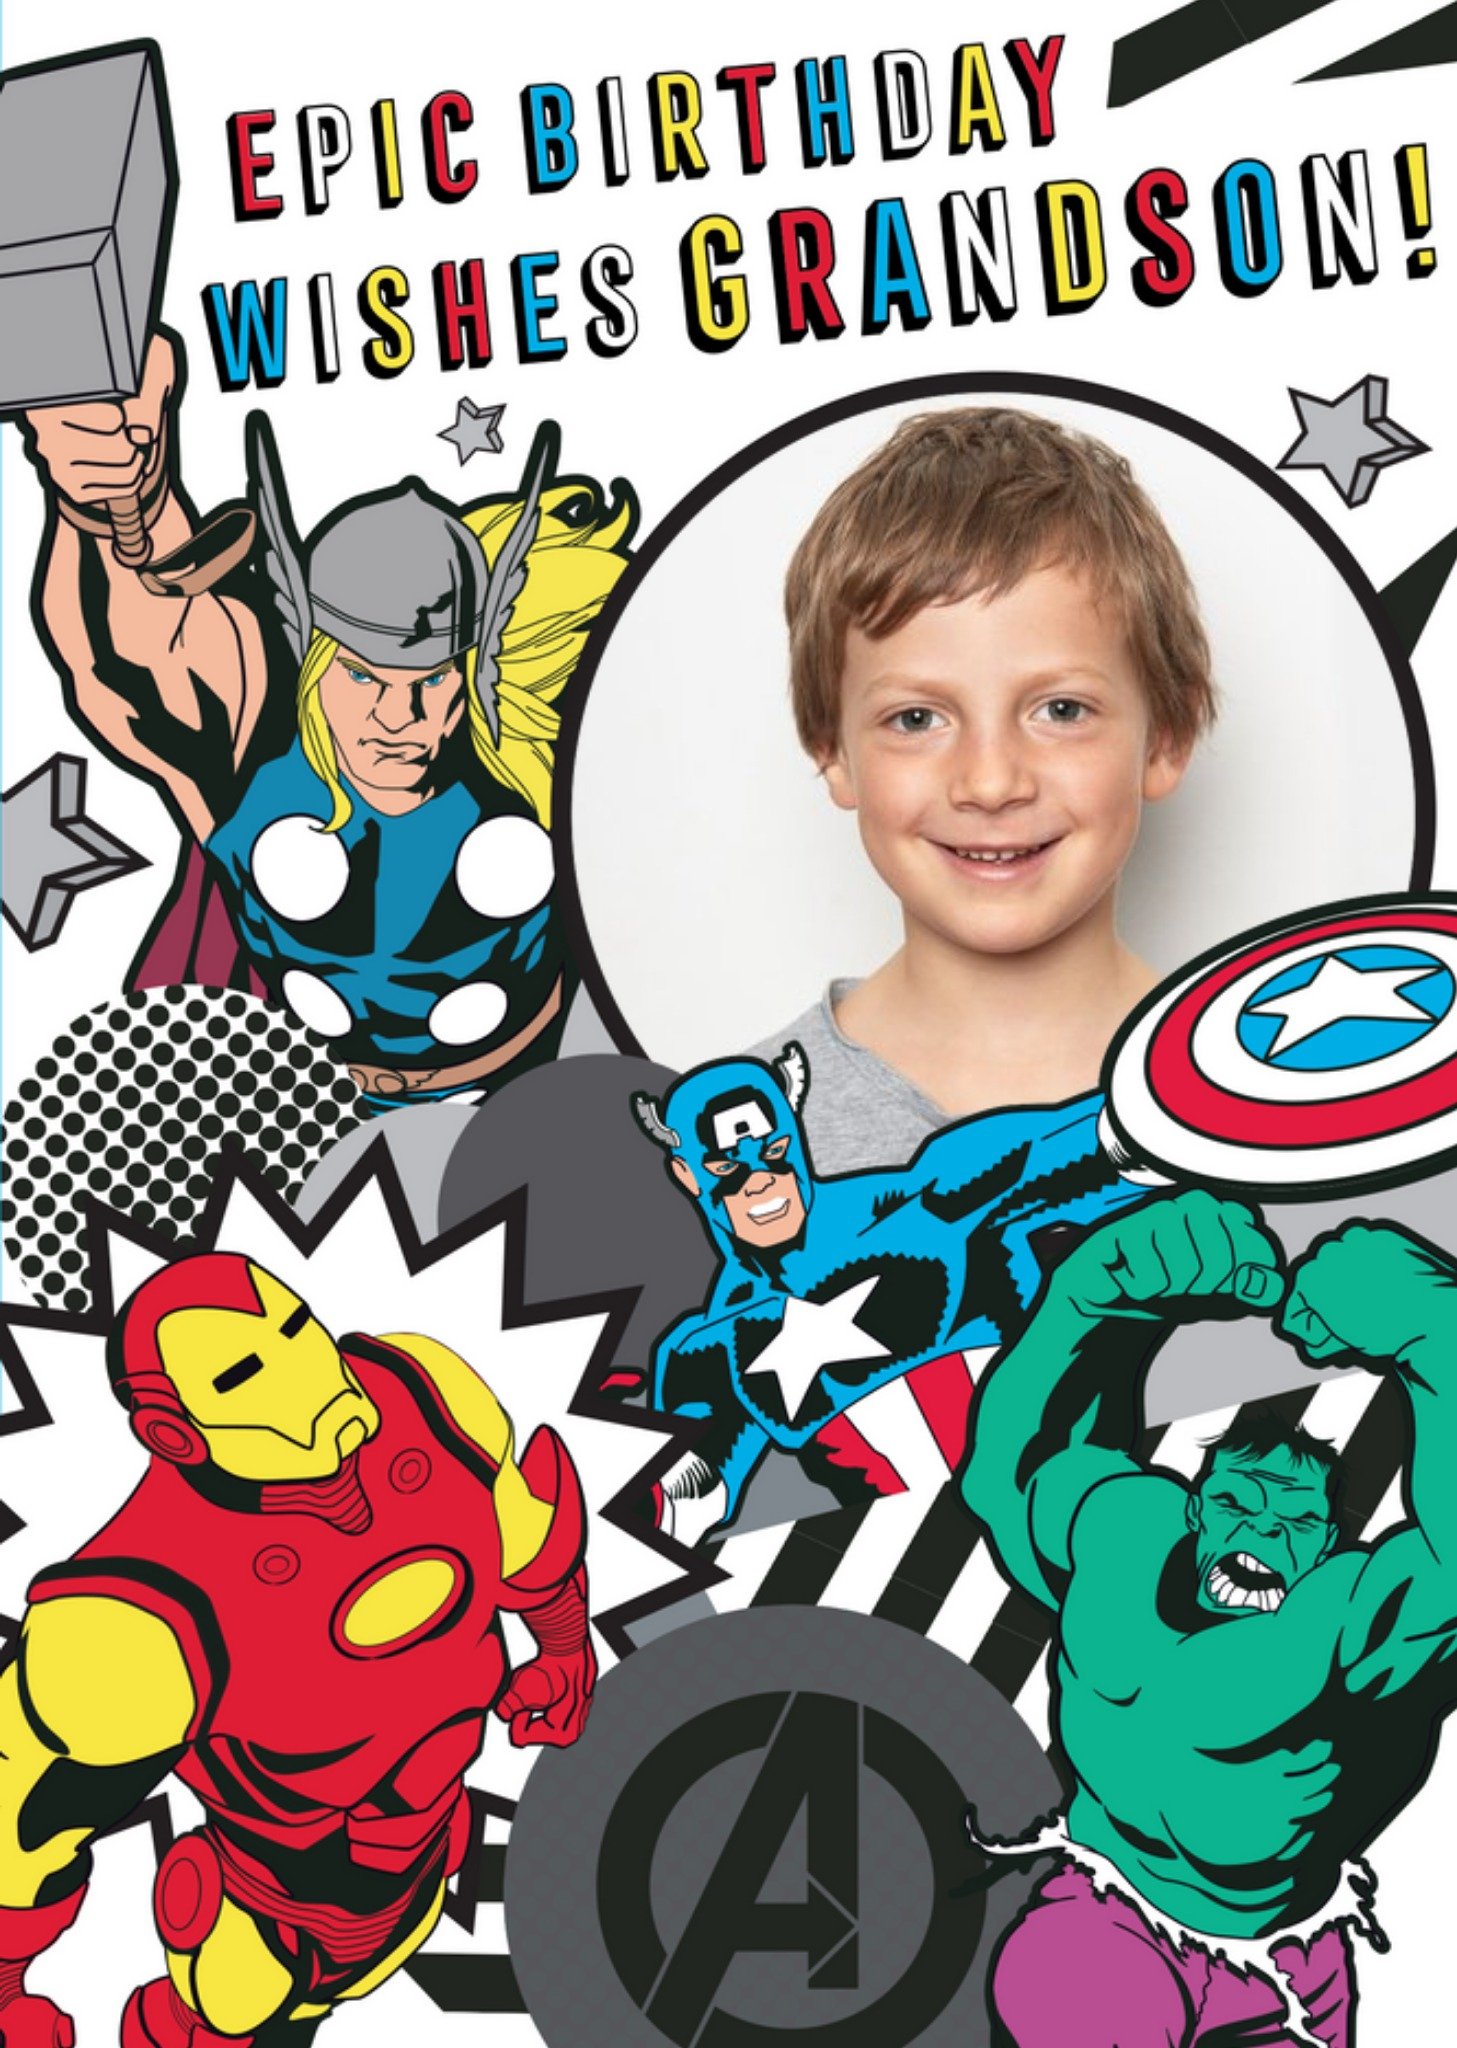 Marvel Comics Grandson Epic Birthday Photo Upload Card, Large